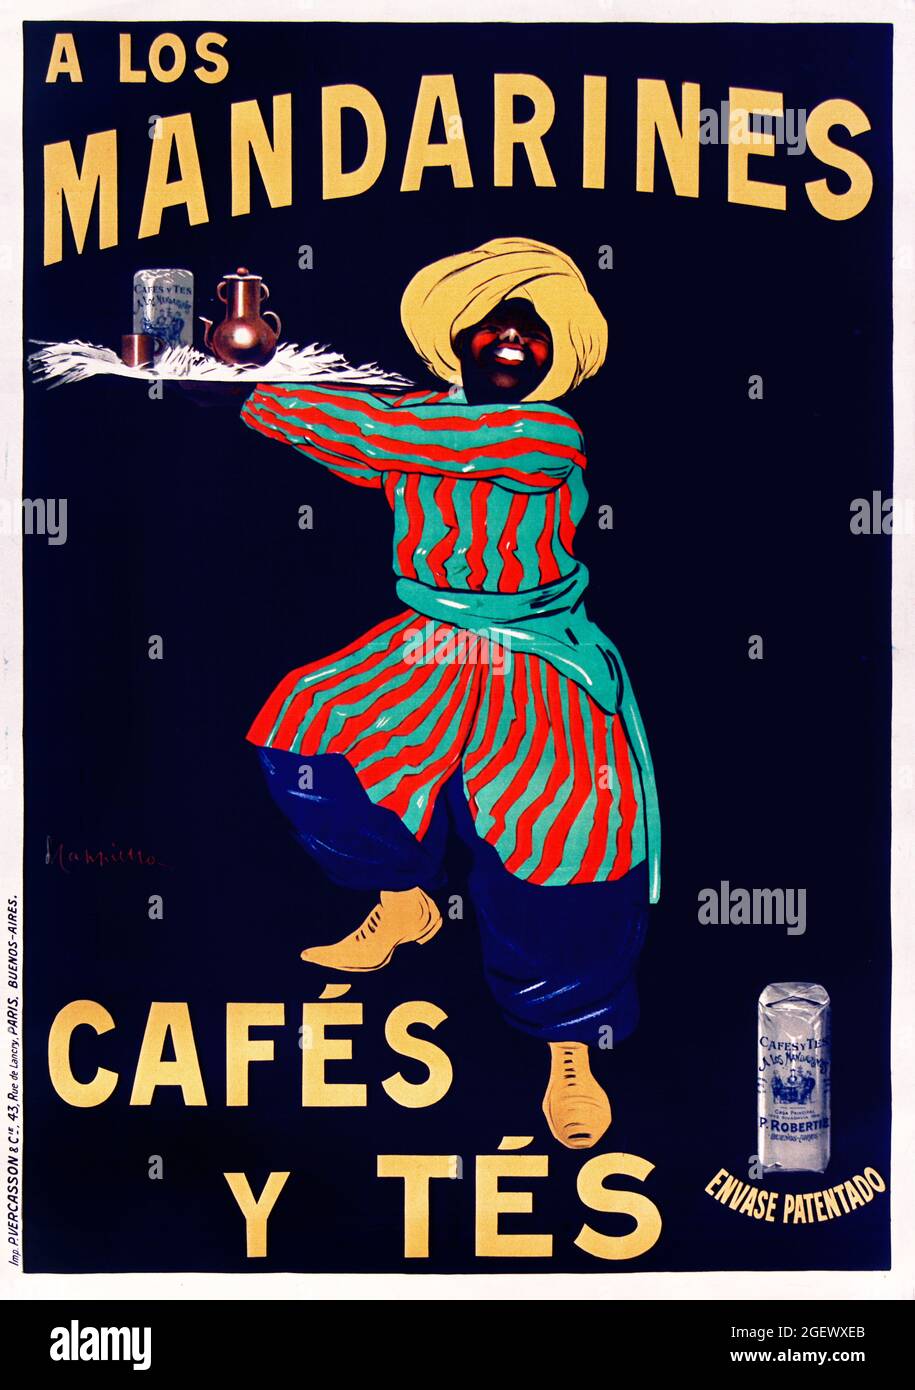 A los mandarini cafes y tés envase patentado (1908) Poster d'epoca - Leonetto Cappiello. Poster pubblicitario. Foto Stock